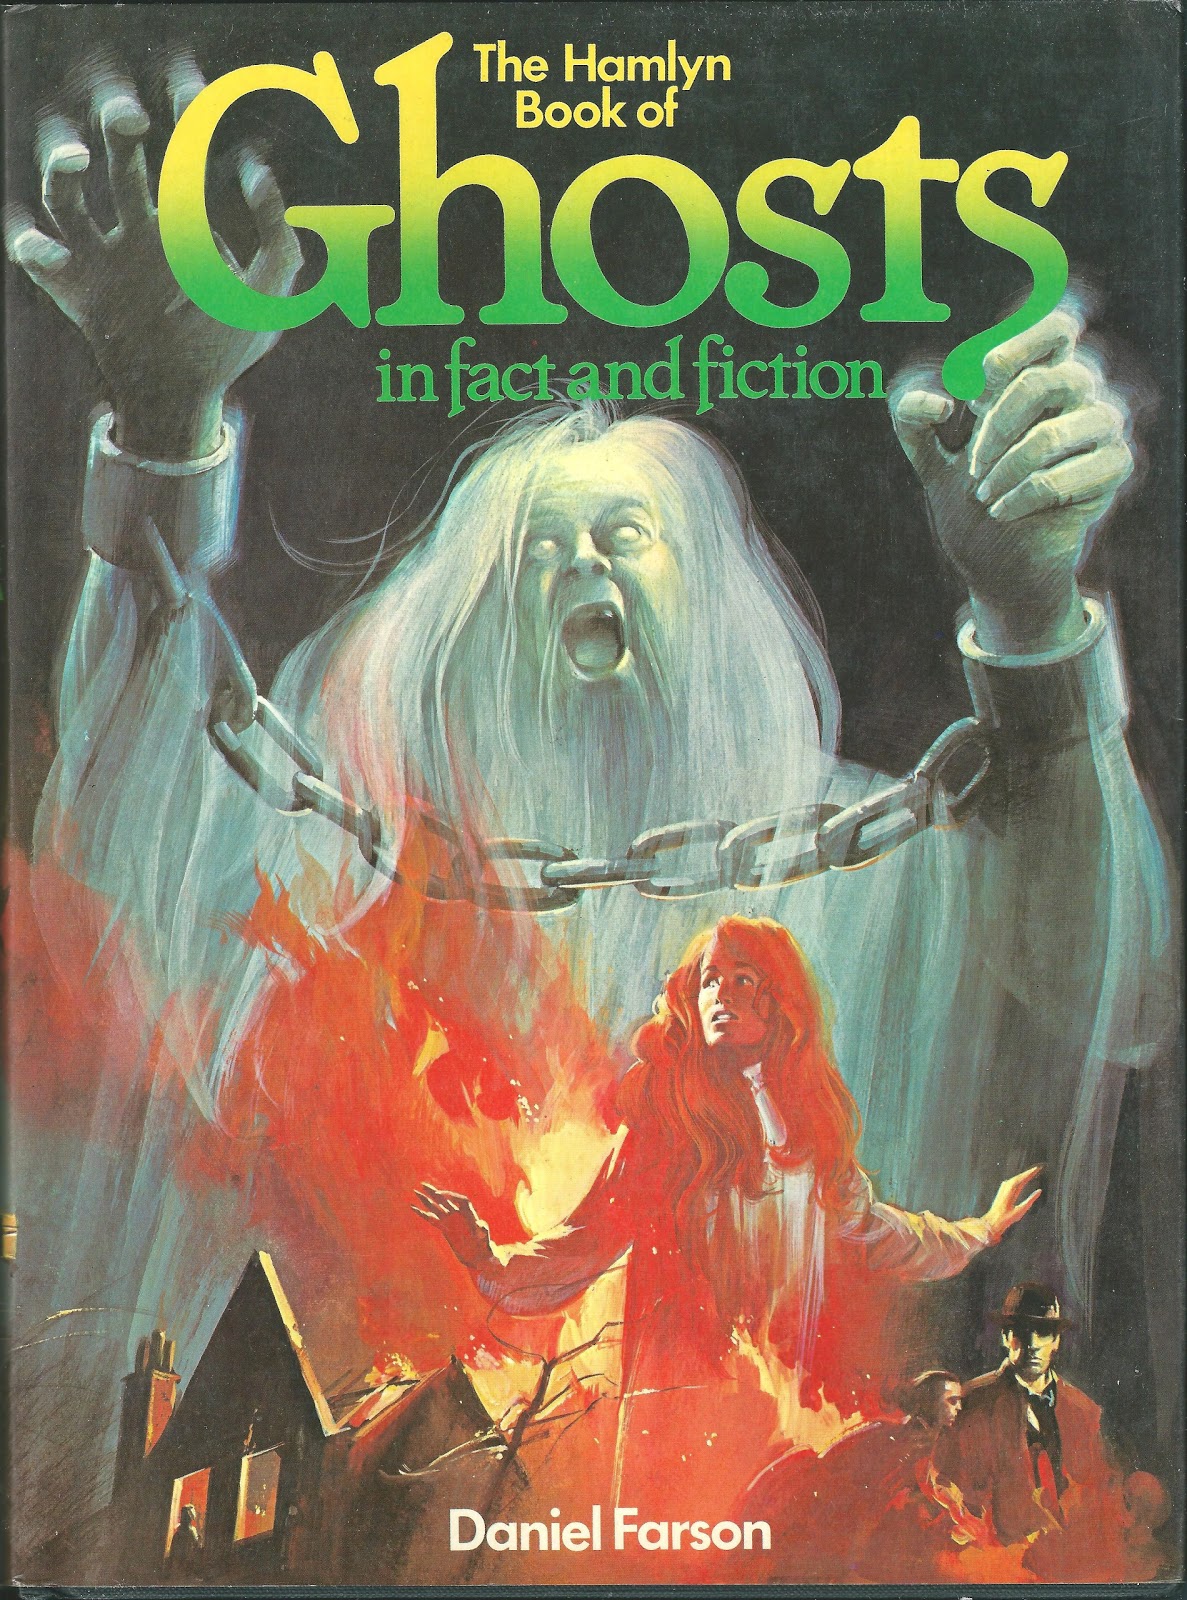 Hamlyn+book+of+Ghosts+001.jpg